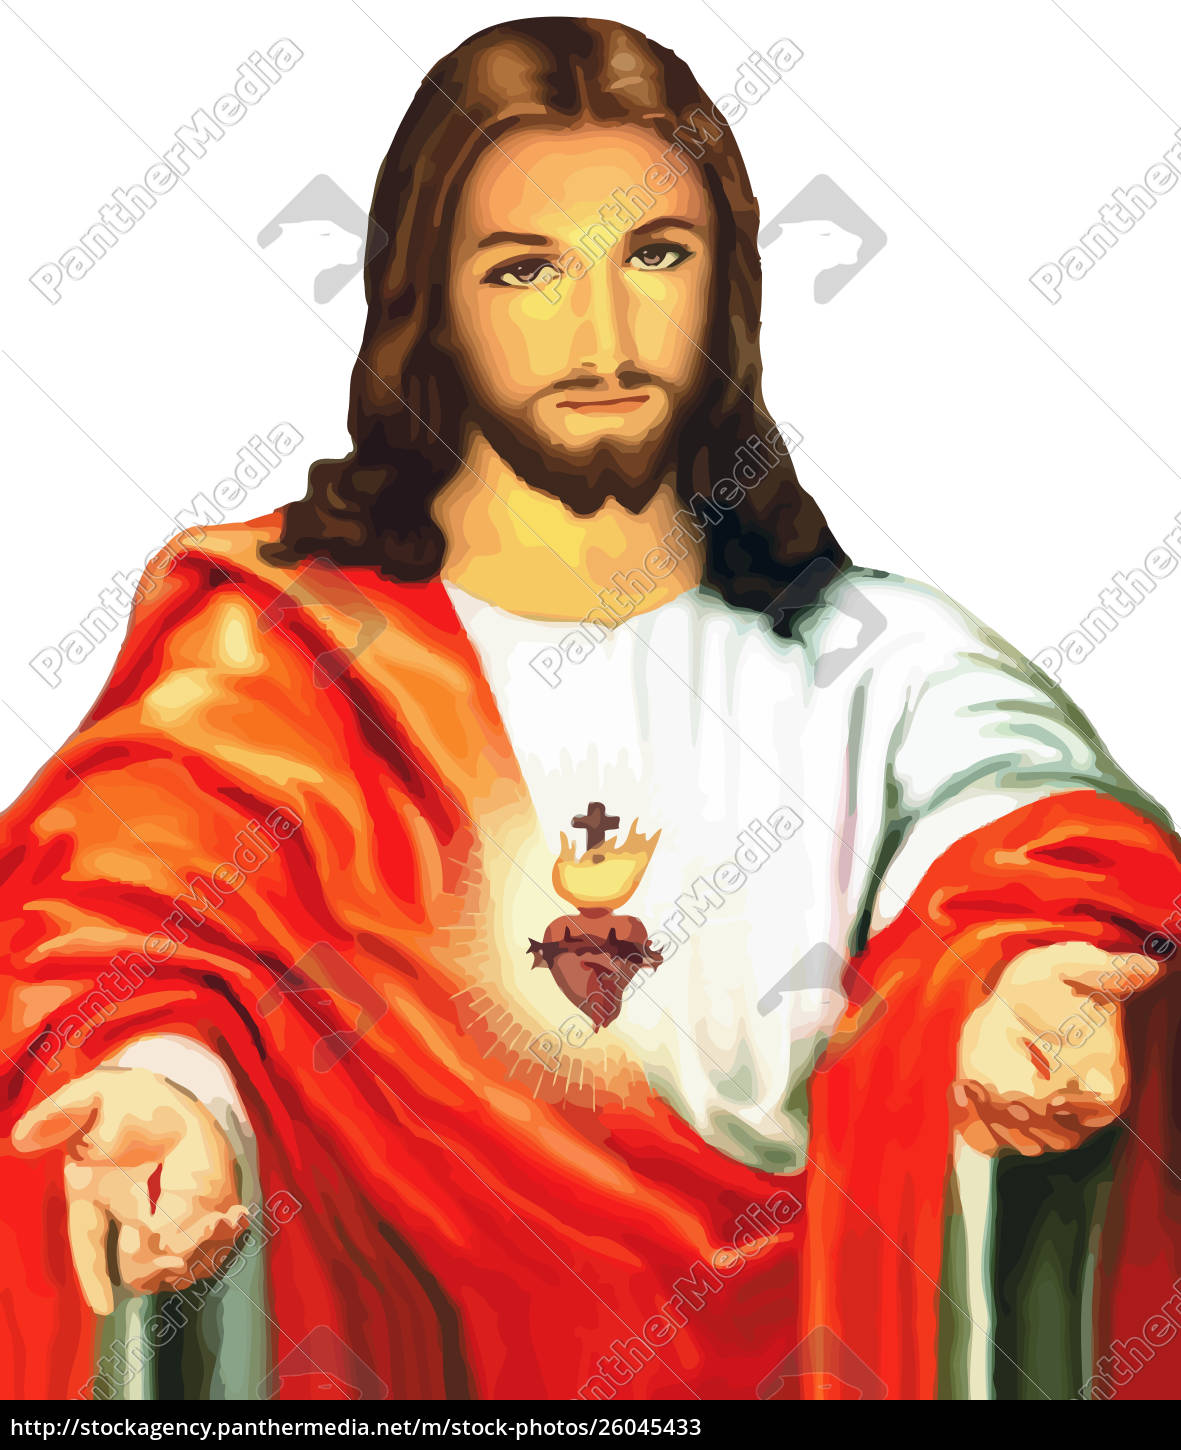 Imagens de Cristo  Imagens de jesus, Imagens de cristo, Sagrado